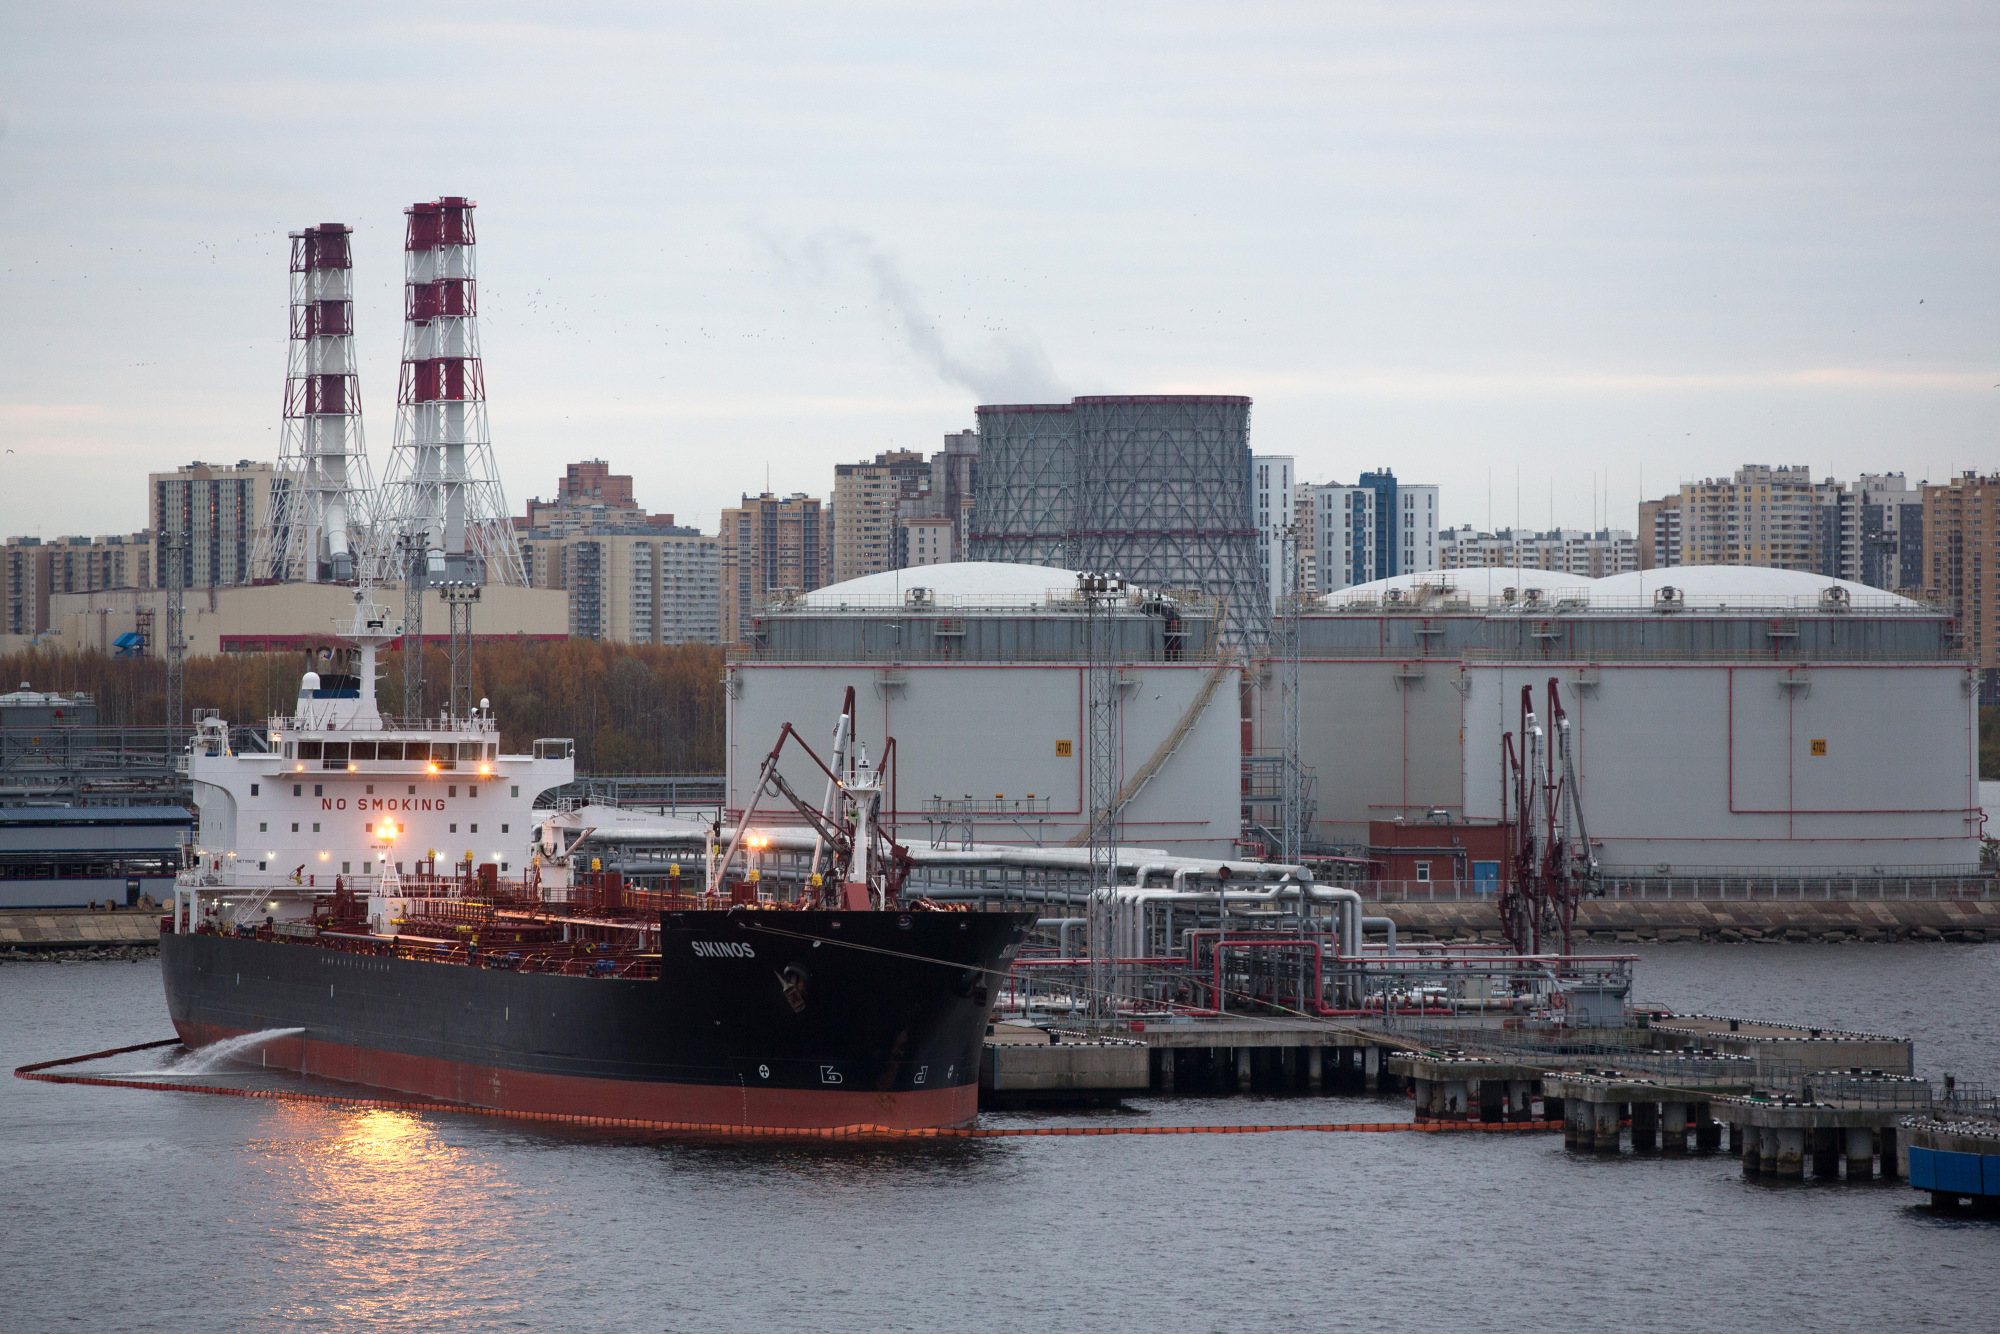 An oil tanker&nbsp;at the Big Port of Saint-Petersburg in Saint Petersburg, Russia.